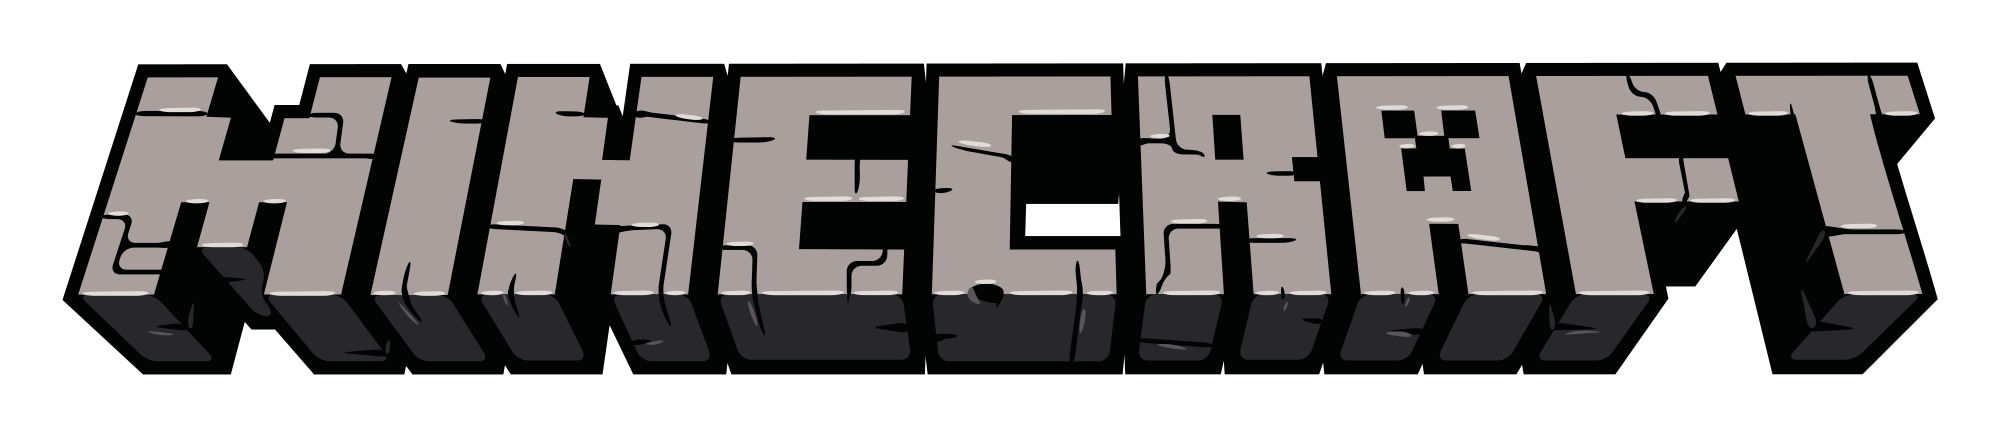 Minecraft Vector Logo - Download Free SVG Icon | Worldvectorlogo